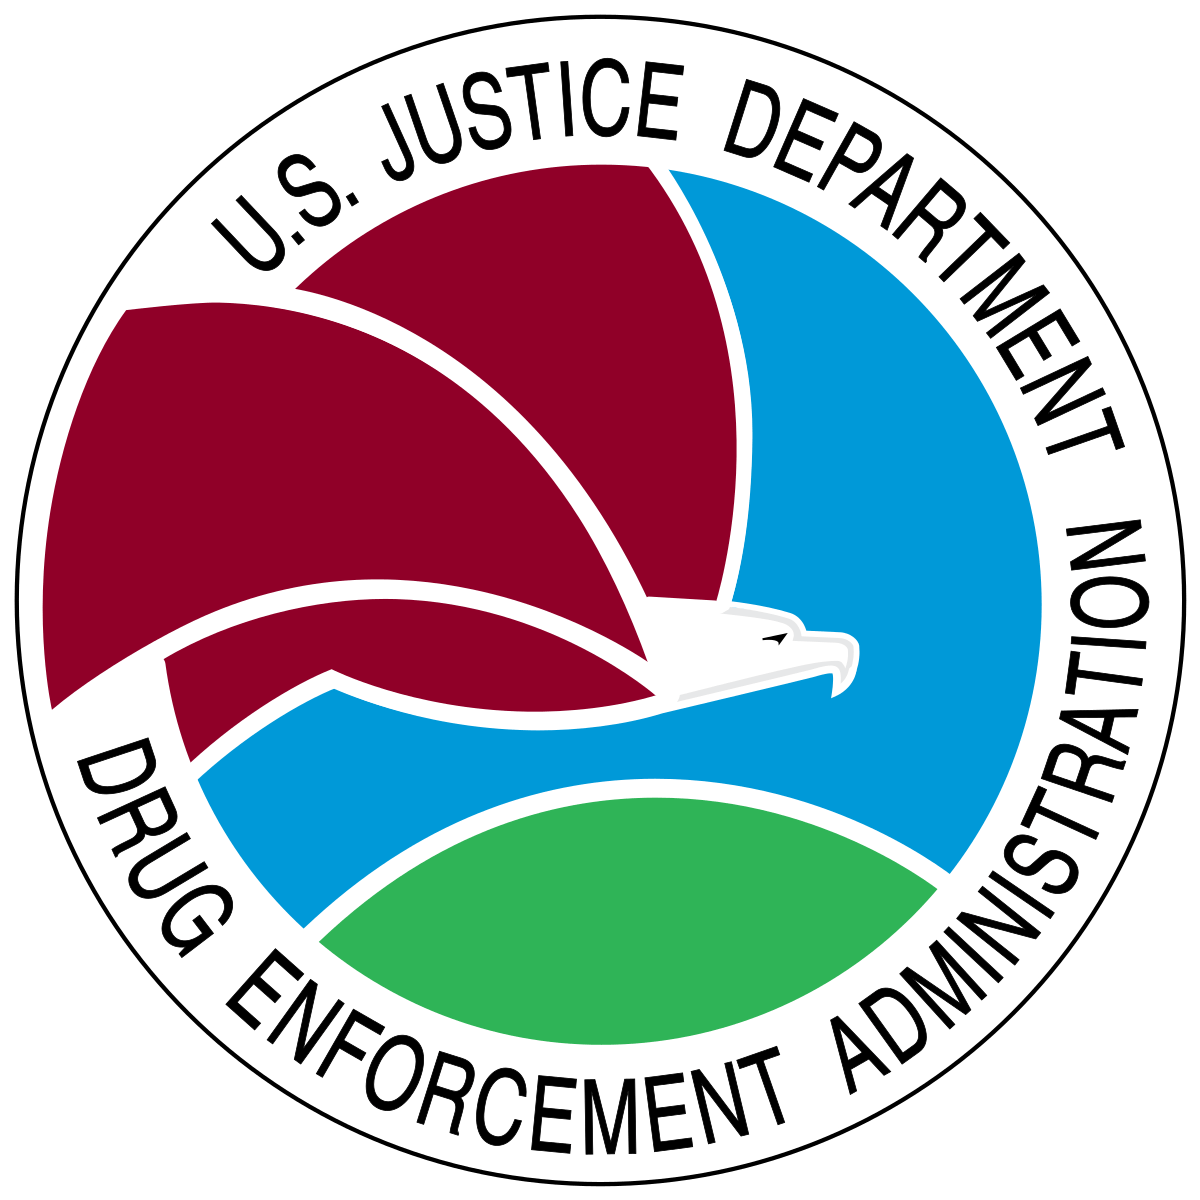 Dea Logo - Drug Enforcement Administration